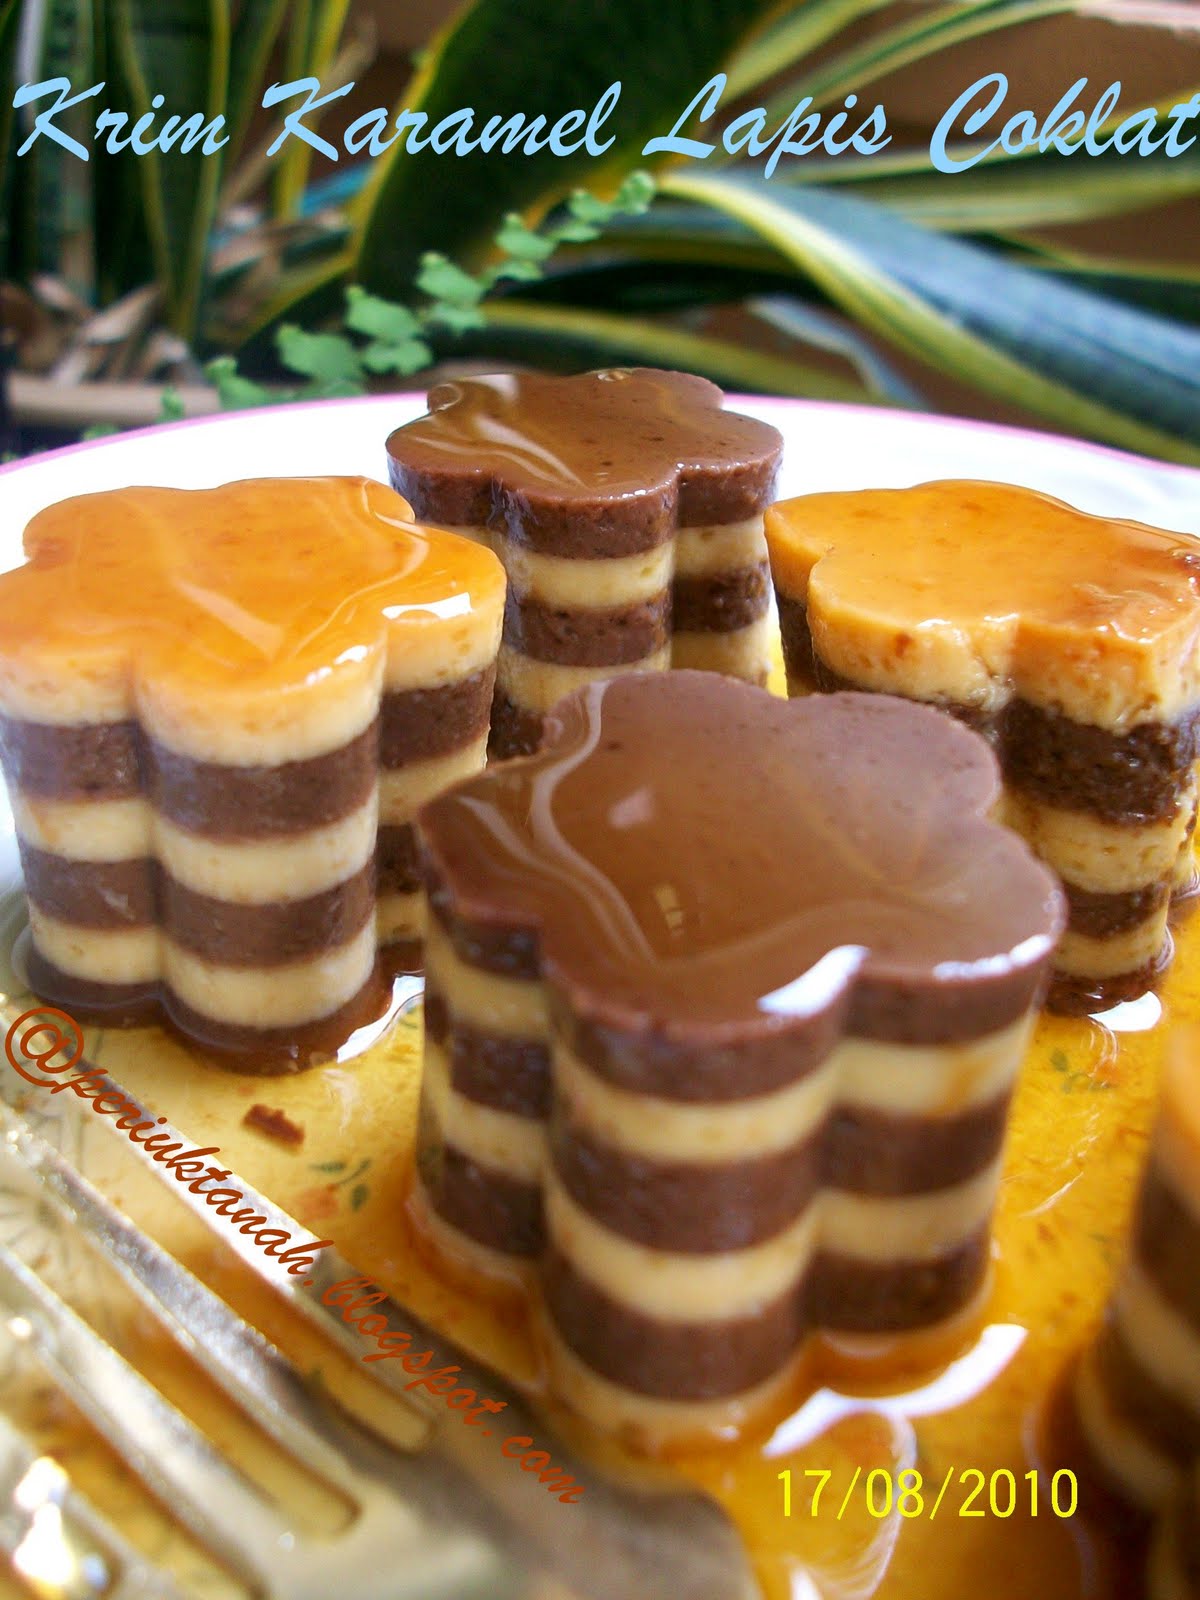 Periuktanah: Krim Karamel Lapis Coklat